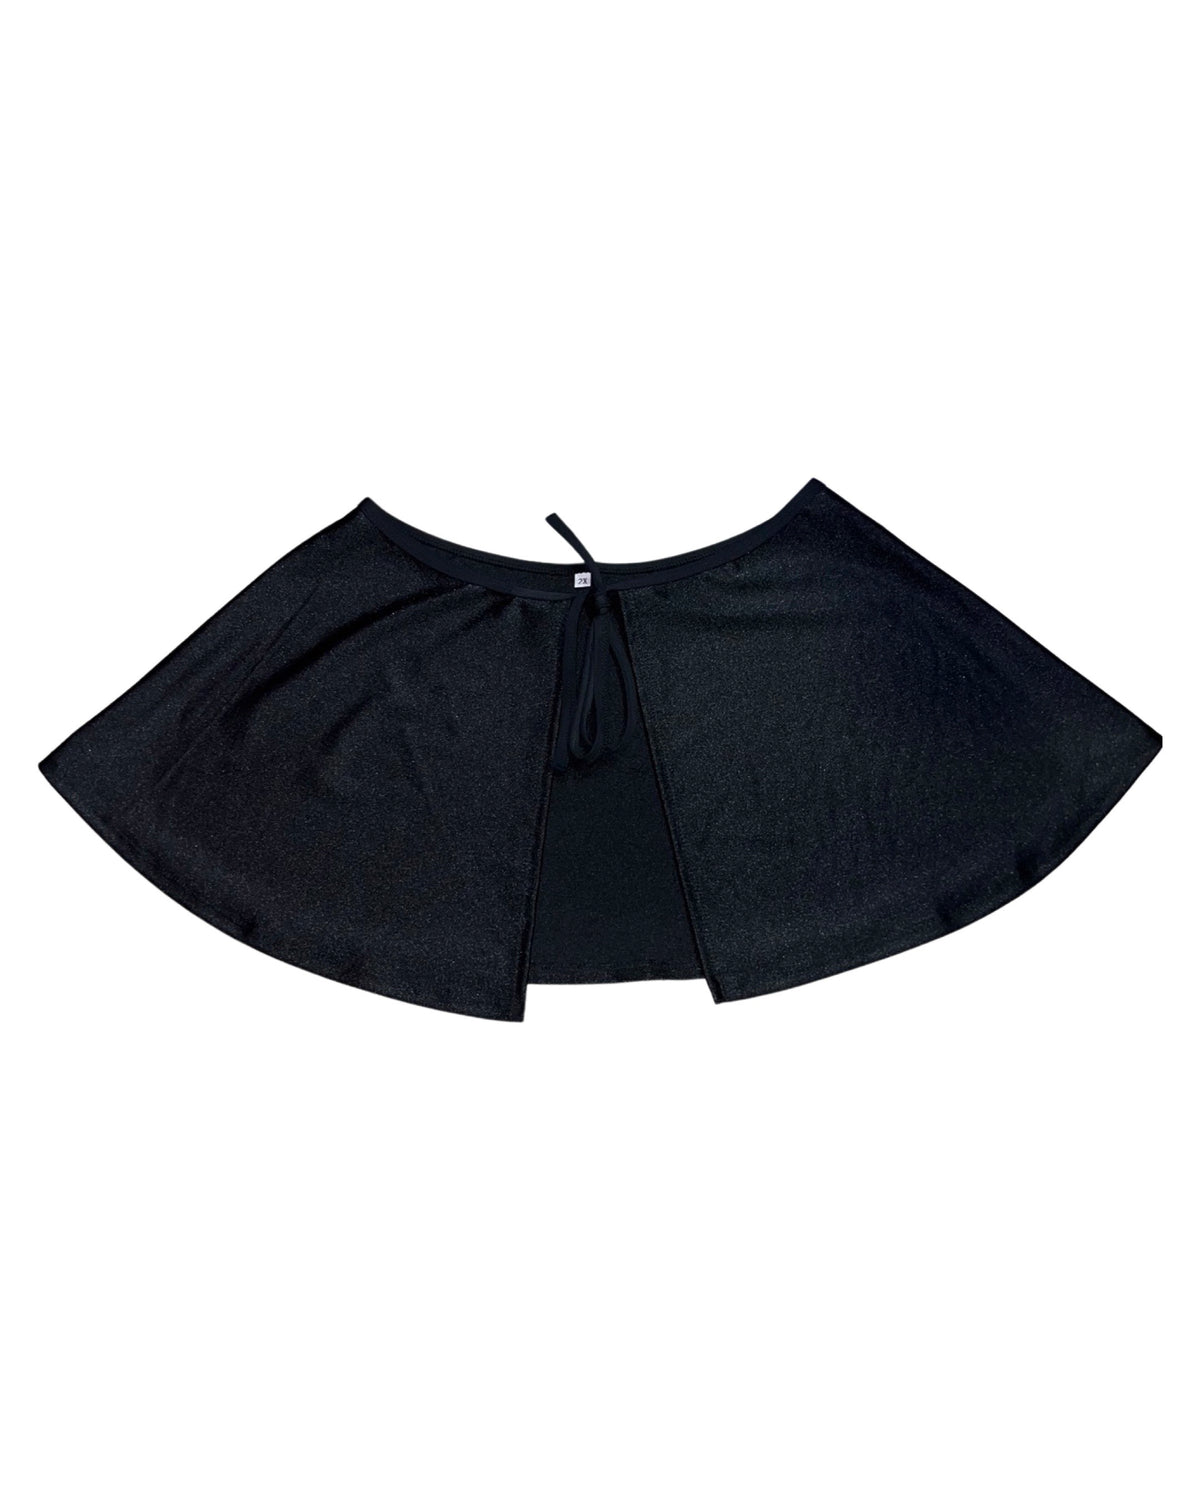 Spandex Skirt